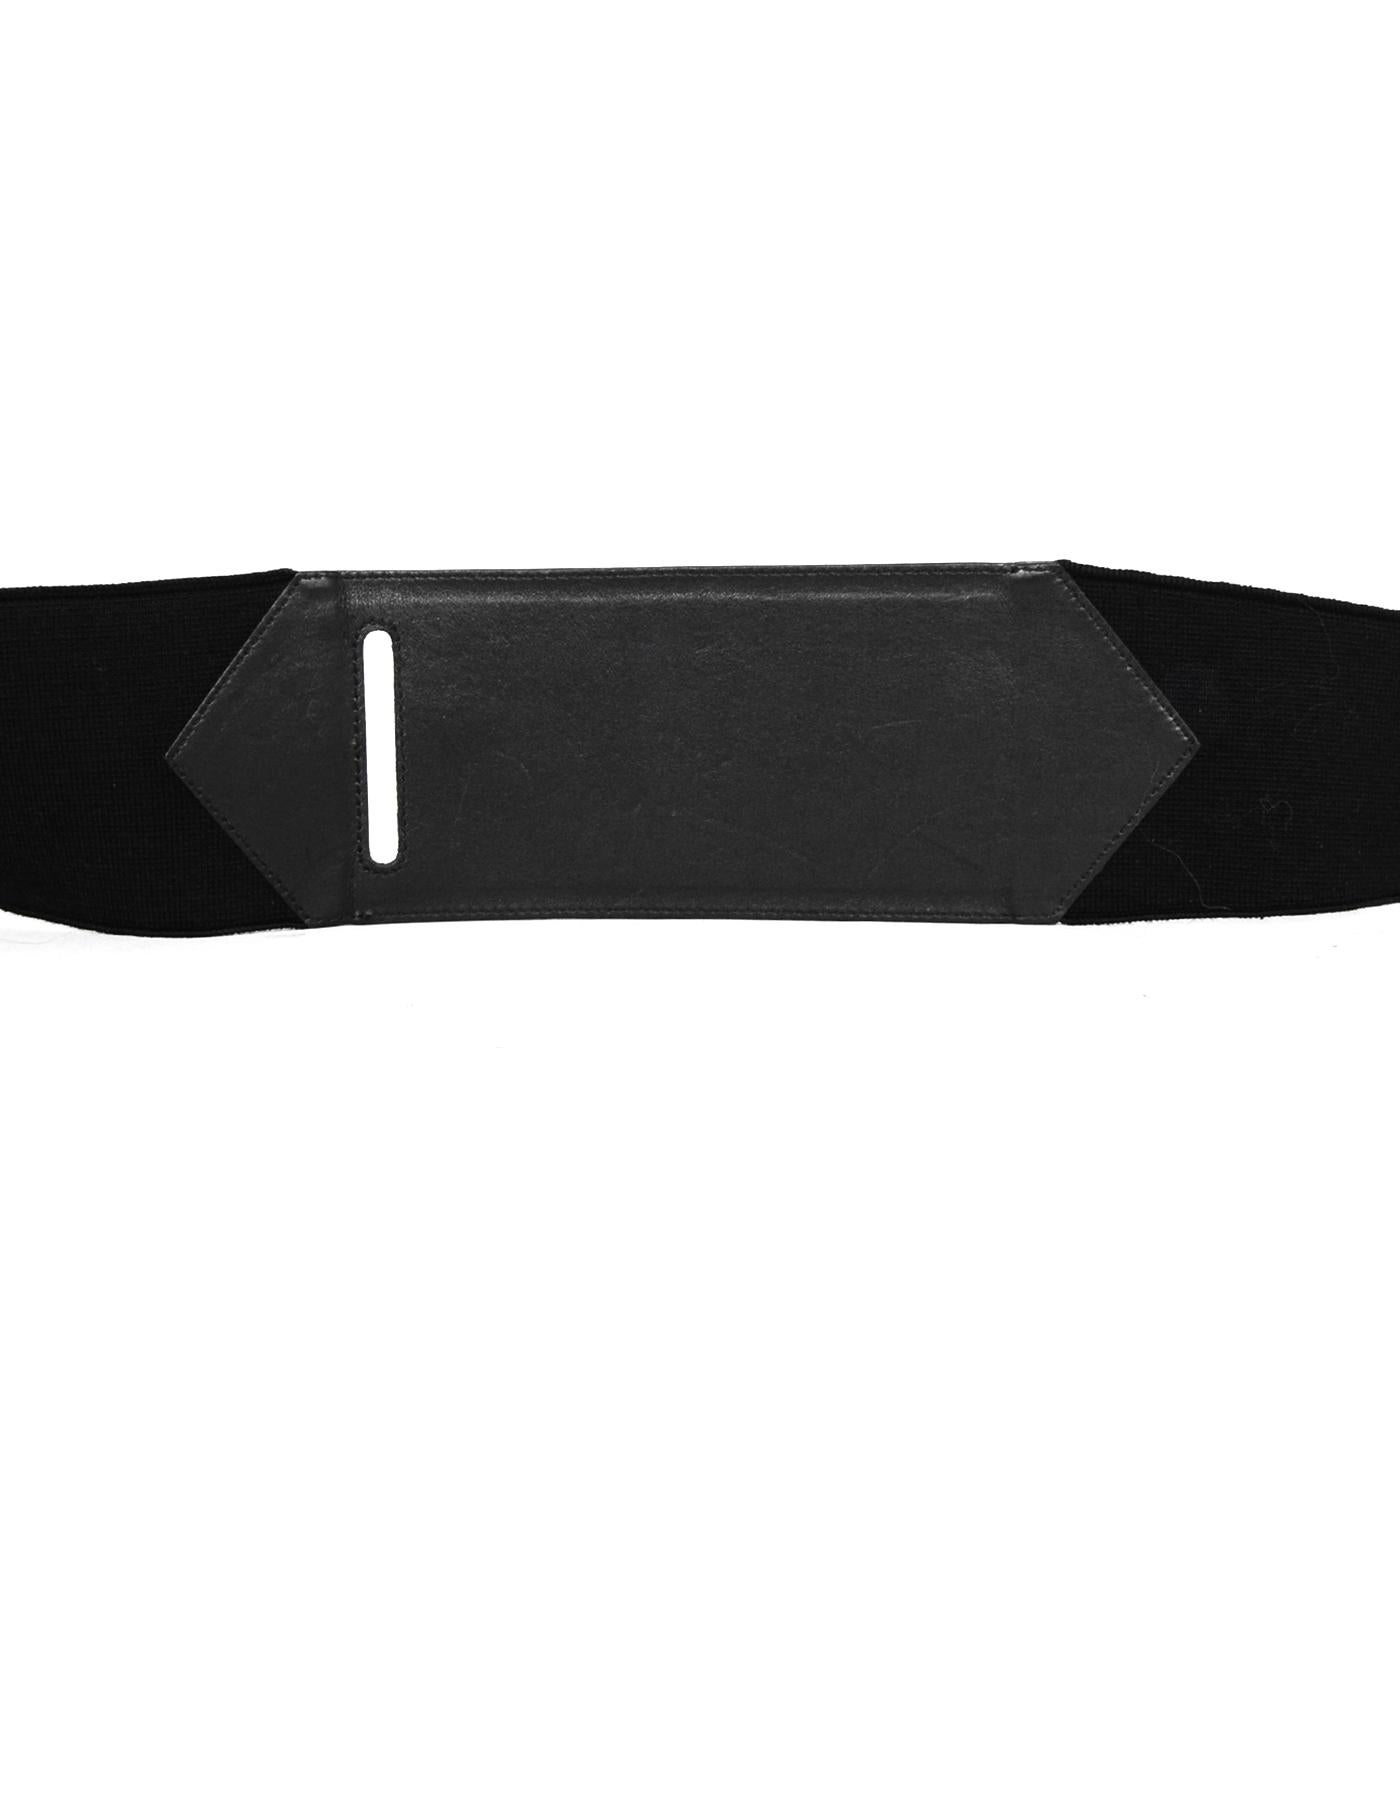 Gucci Black Patent Wrap Belt sz 34 rt $750 1